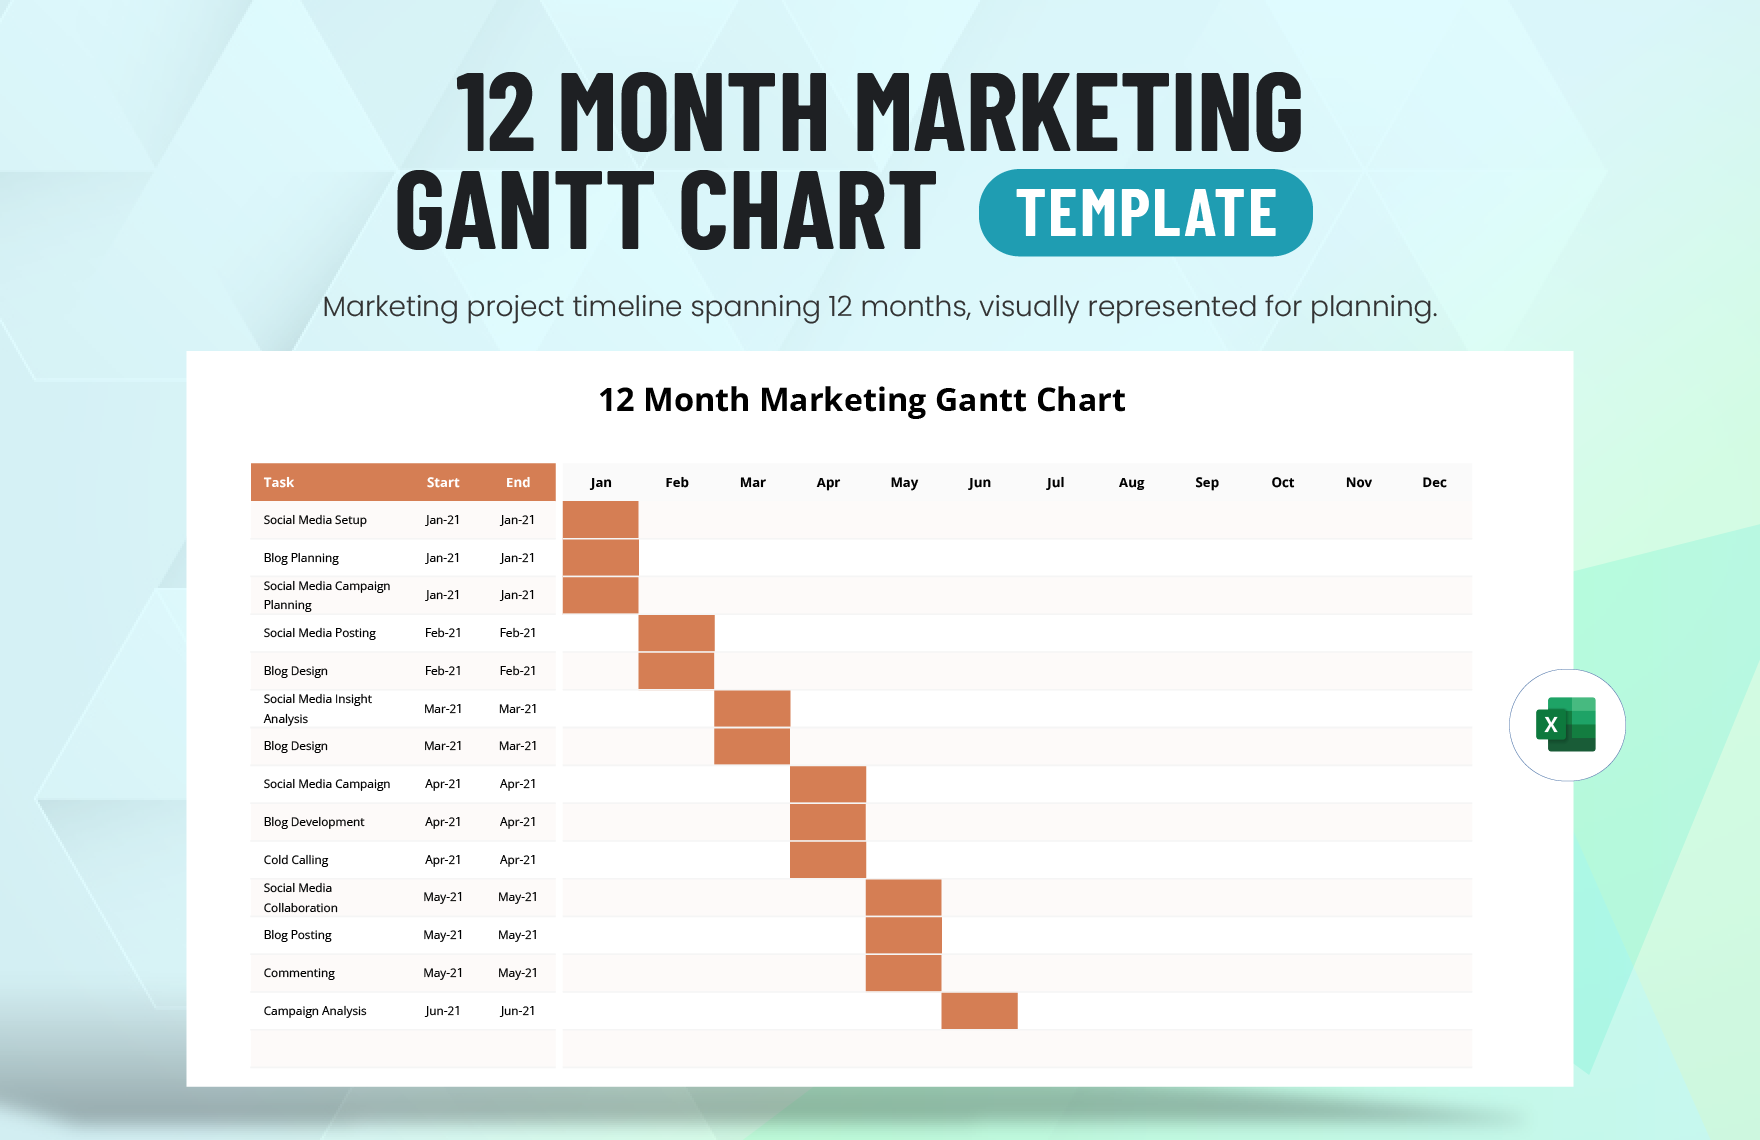 12 Month Marketing Gantt Chart Template in Excel